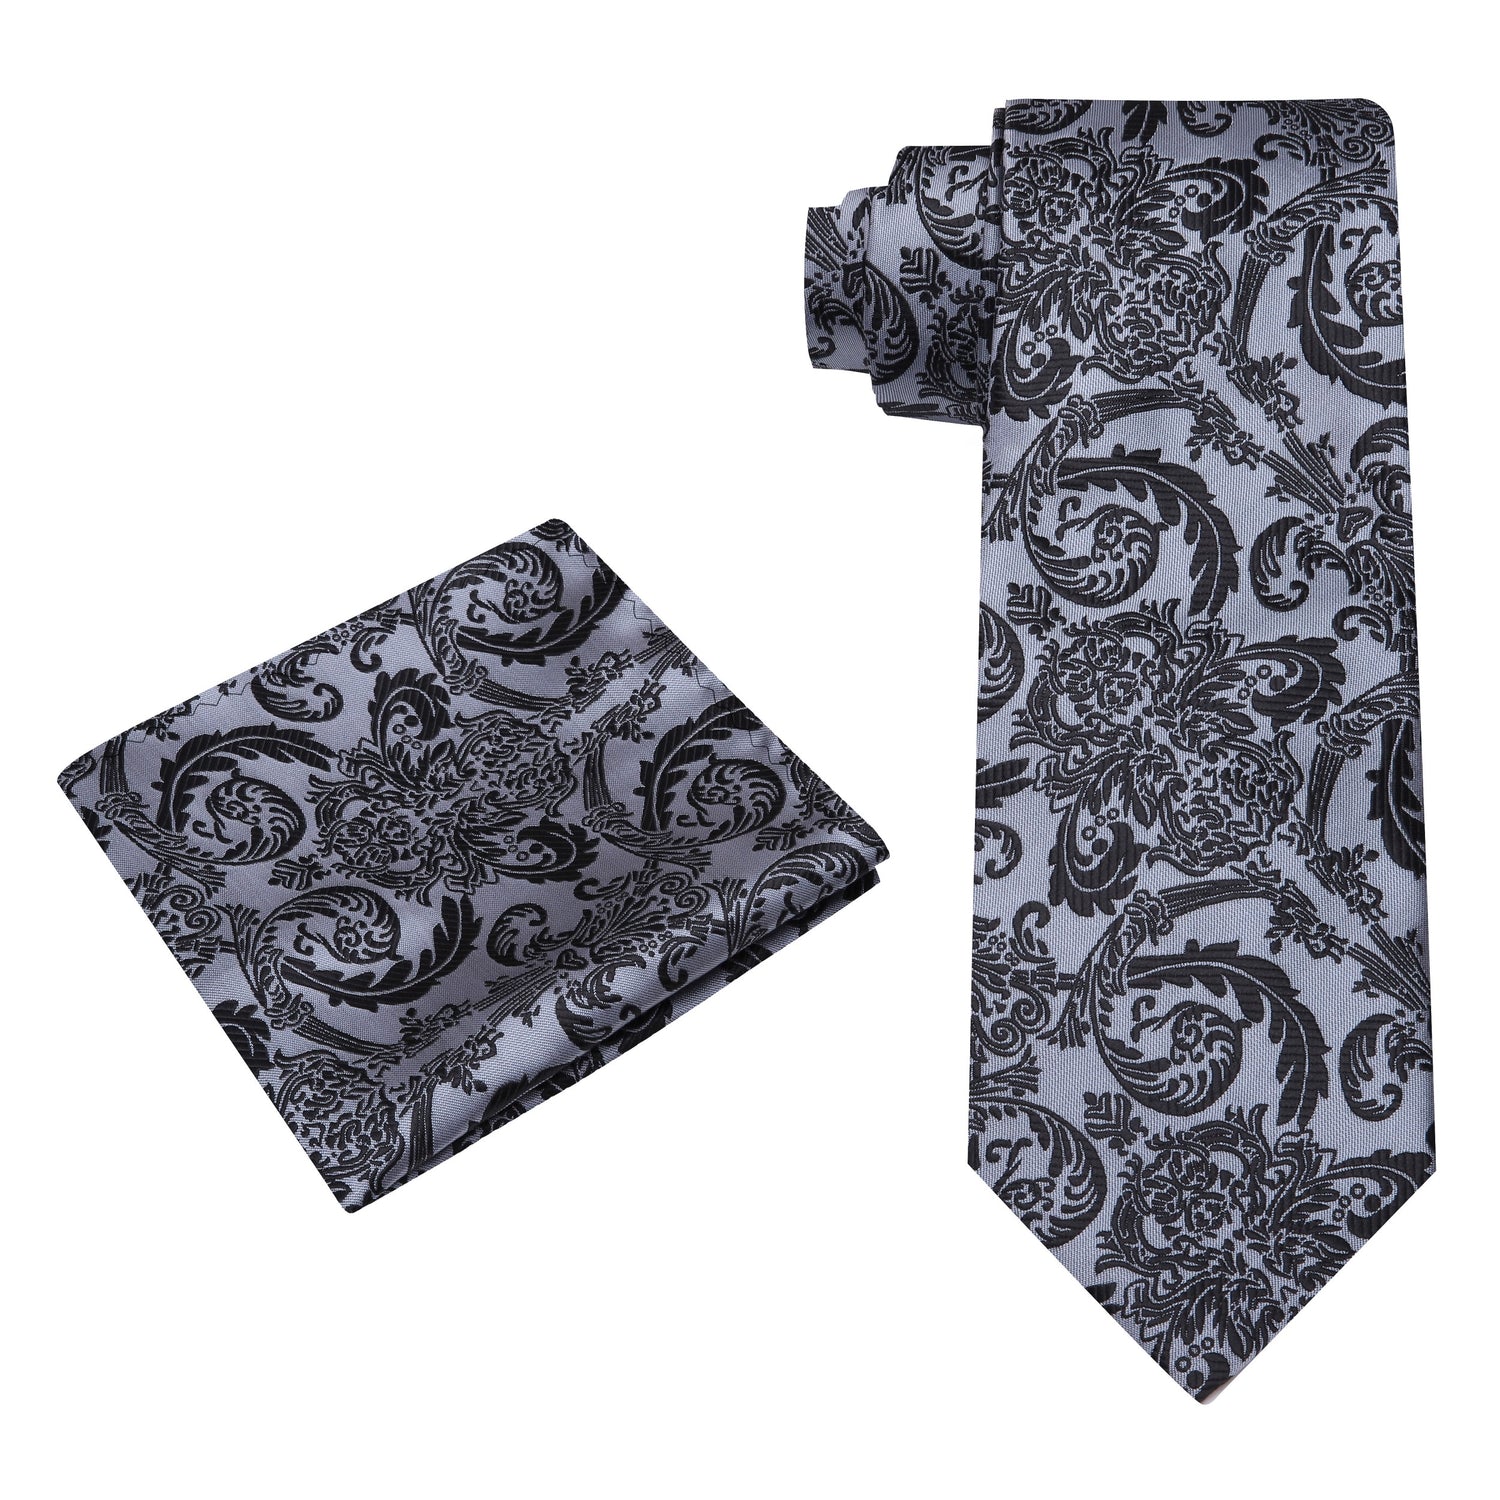 Alt View: A Silver, Black Floral Pattern Silk Necktie, Matching Pocket Square